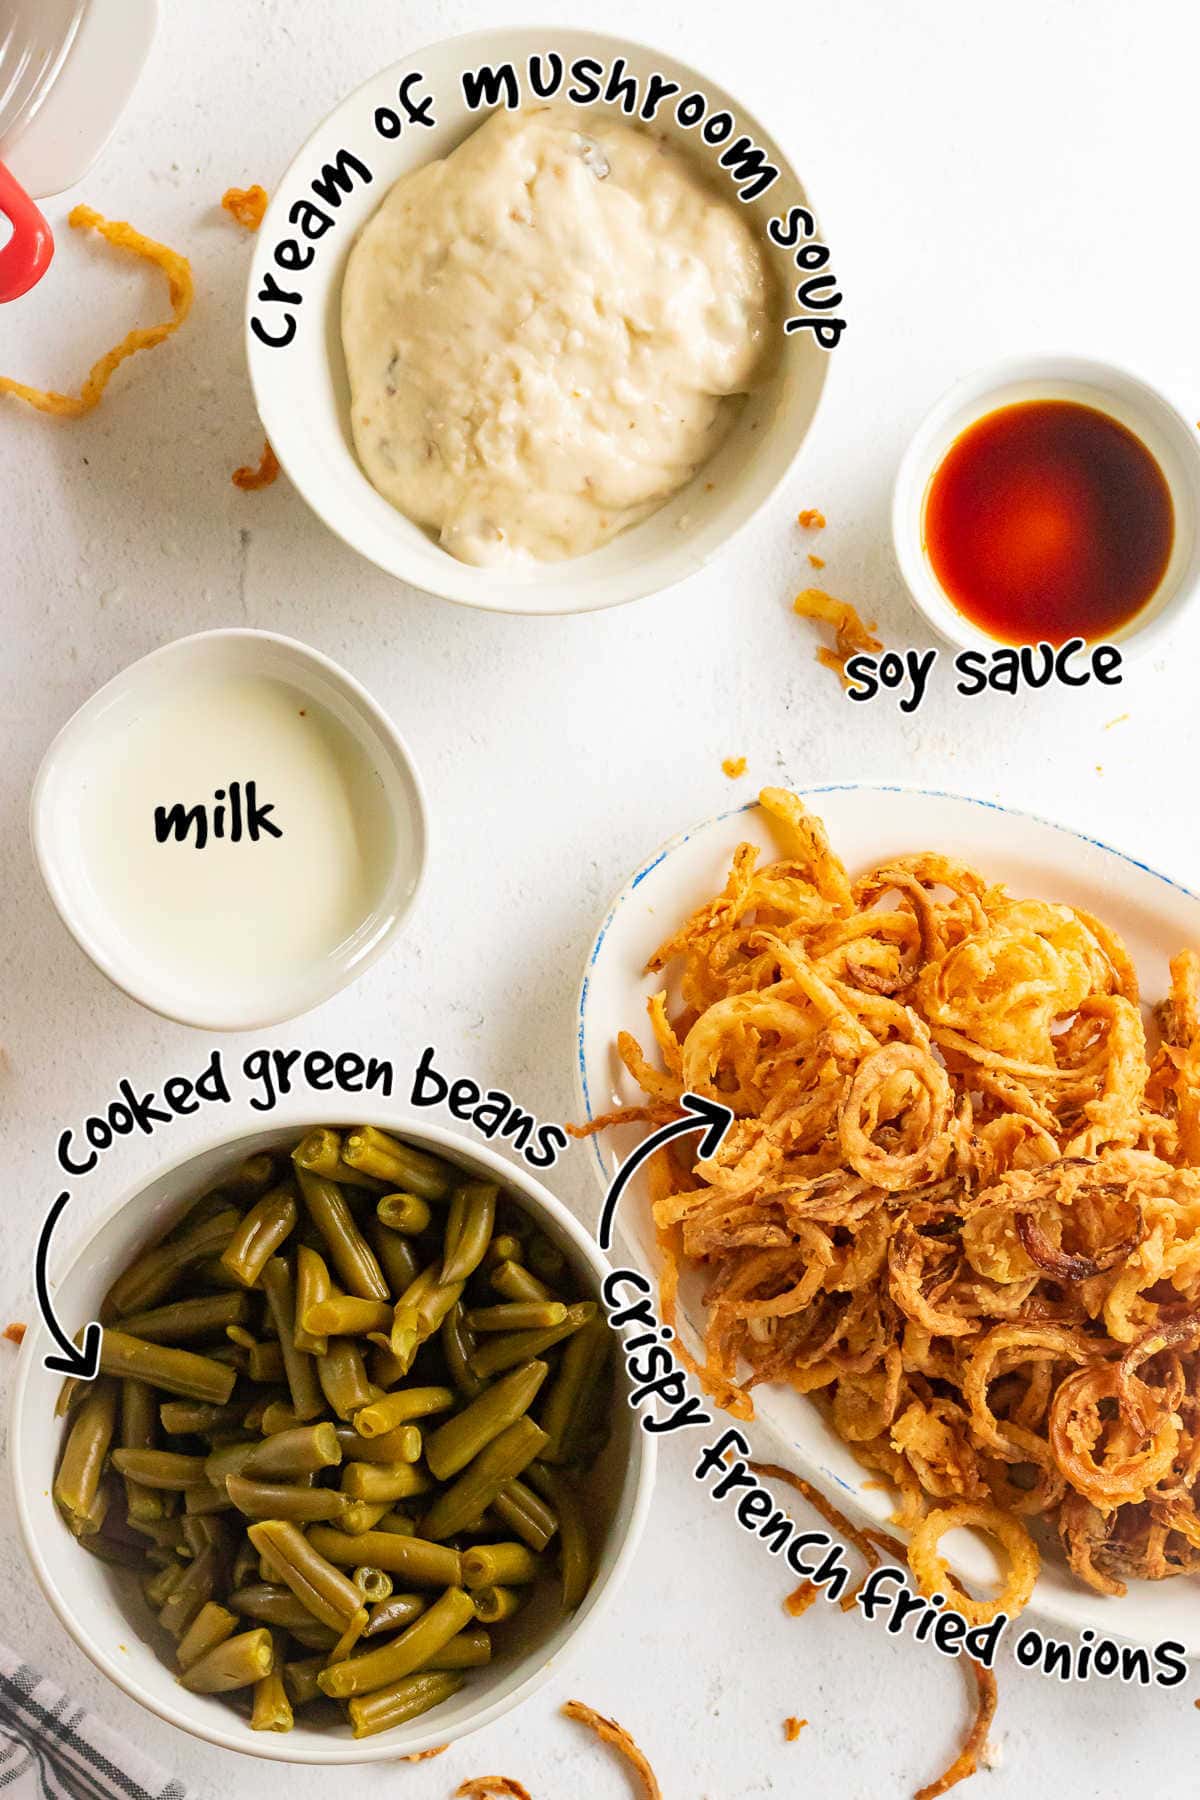 Ingredients for green bean casserole